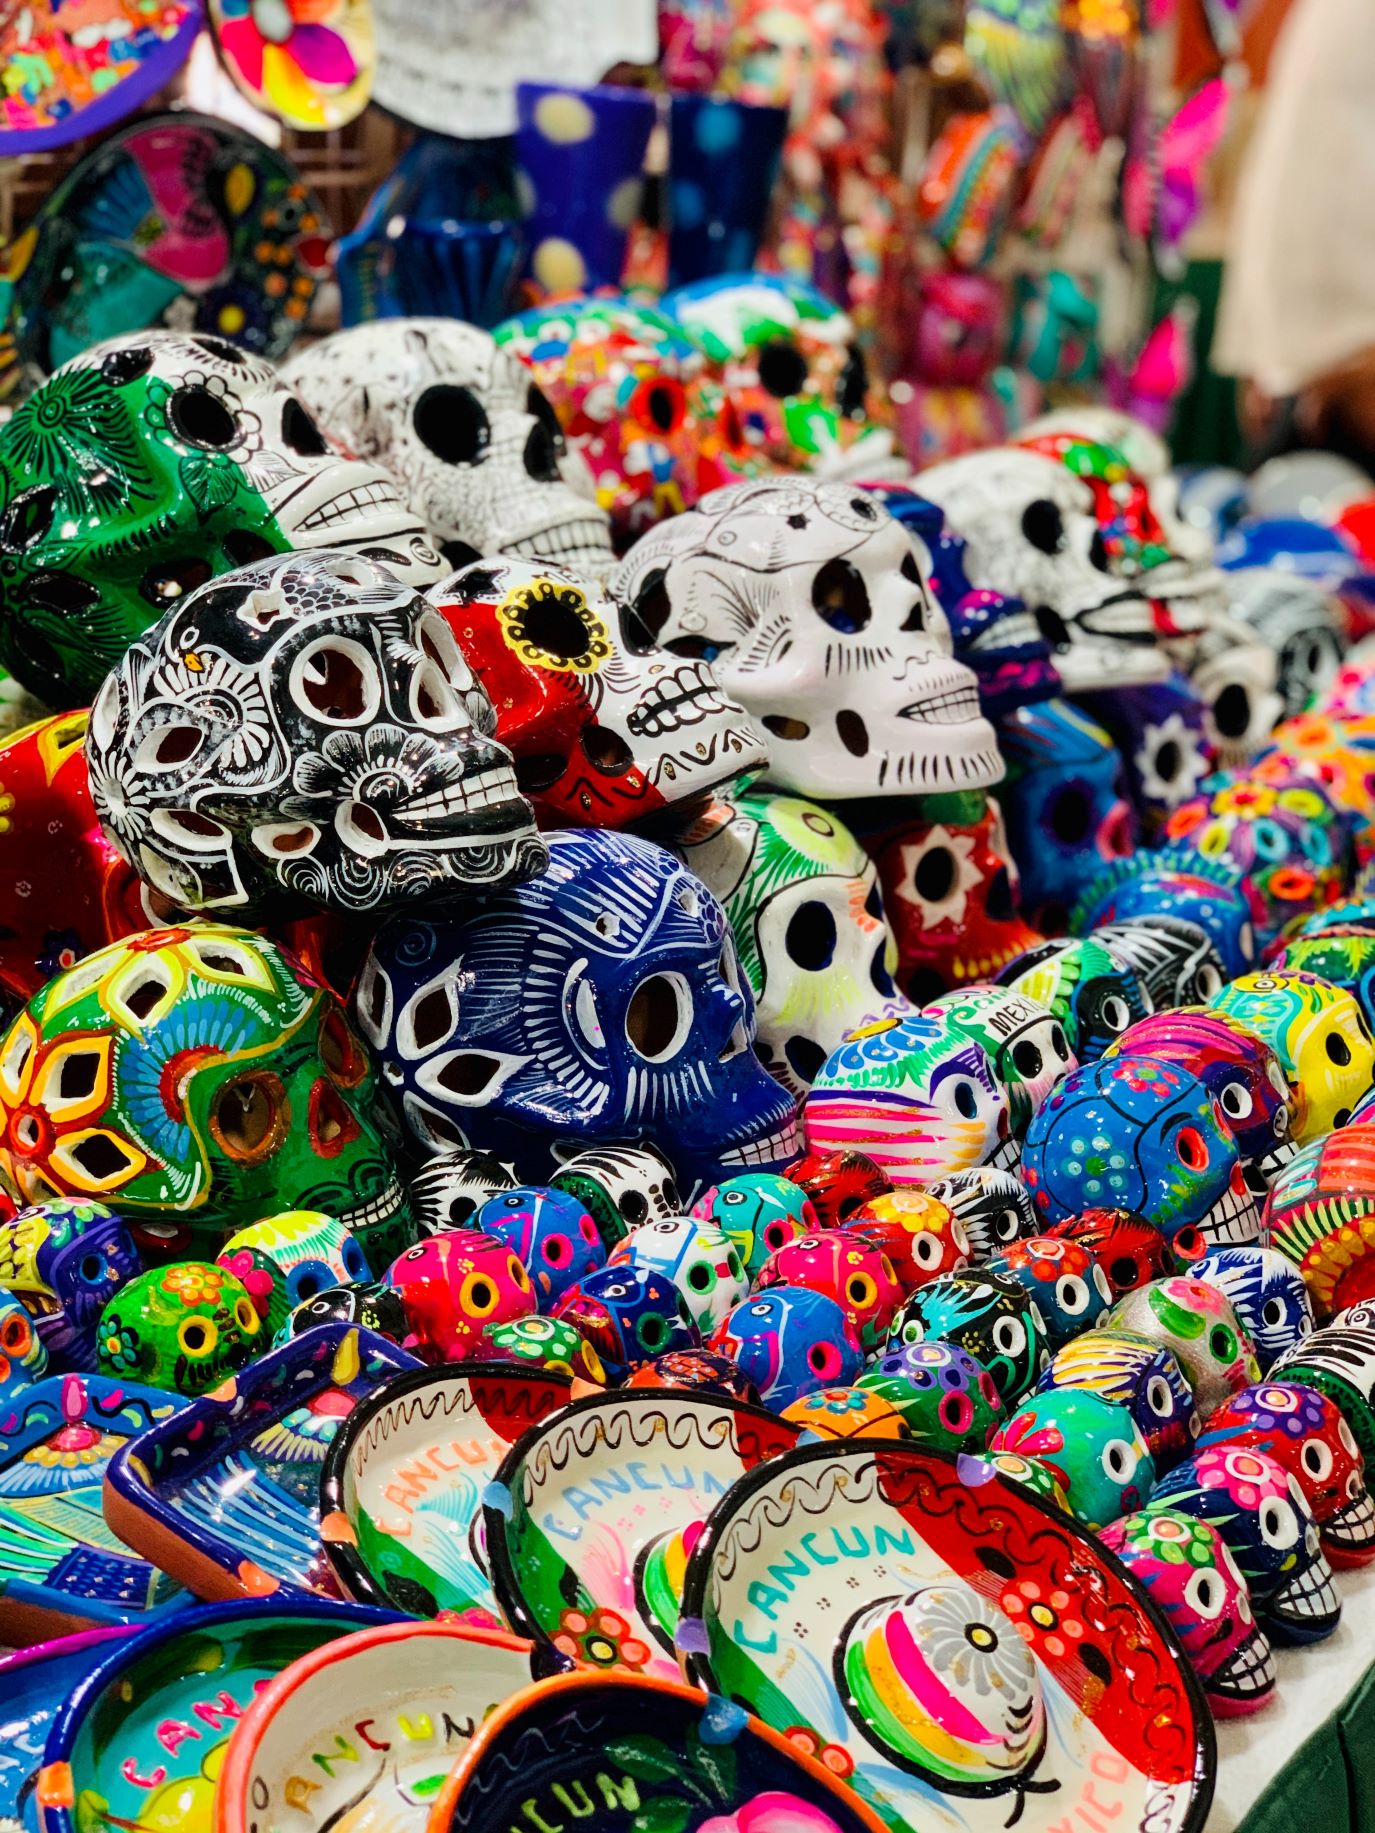 An image of painted skulls representing the Dia de los Muertos celebration.;